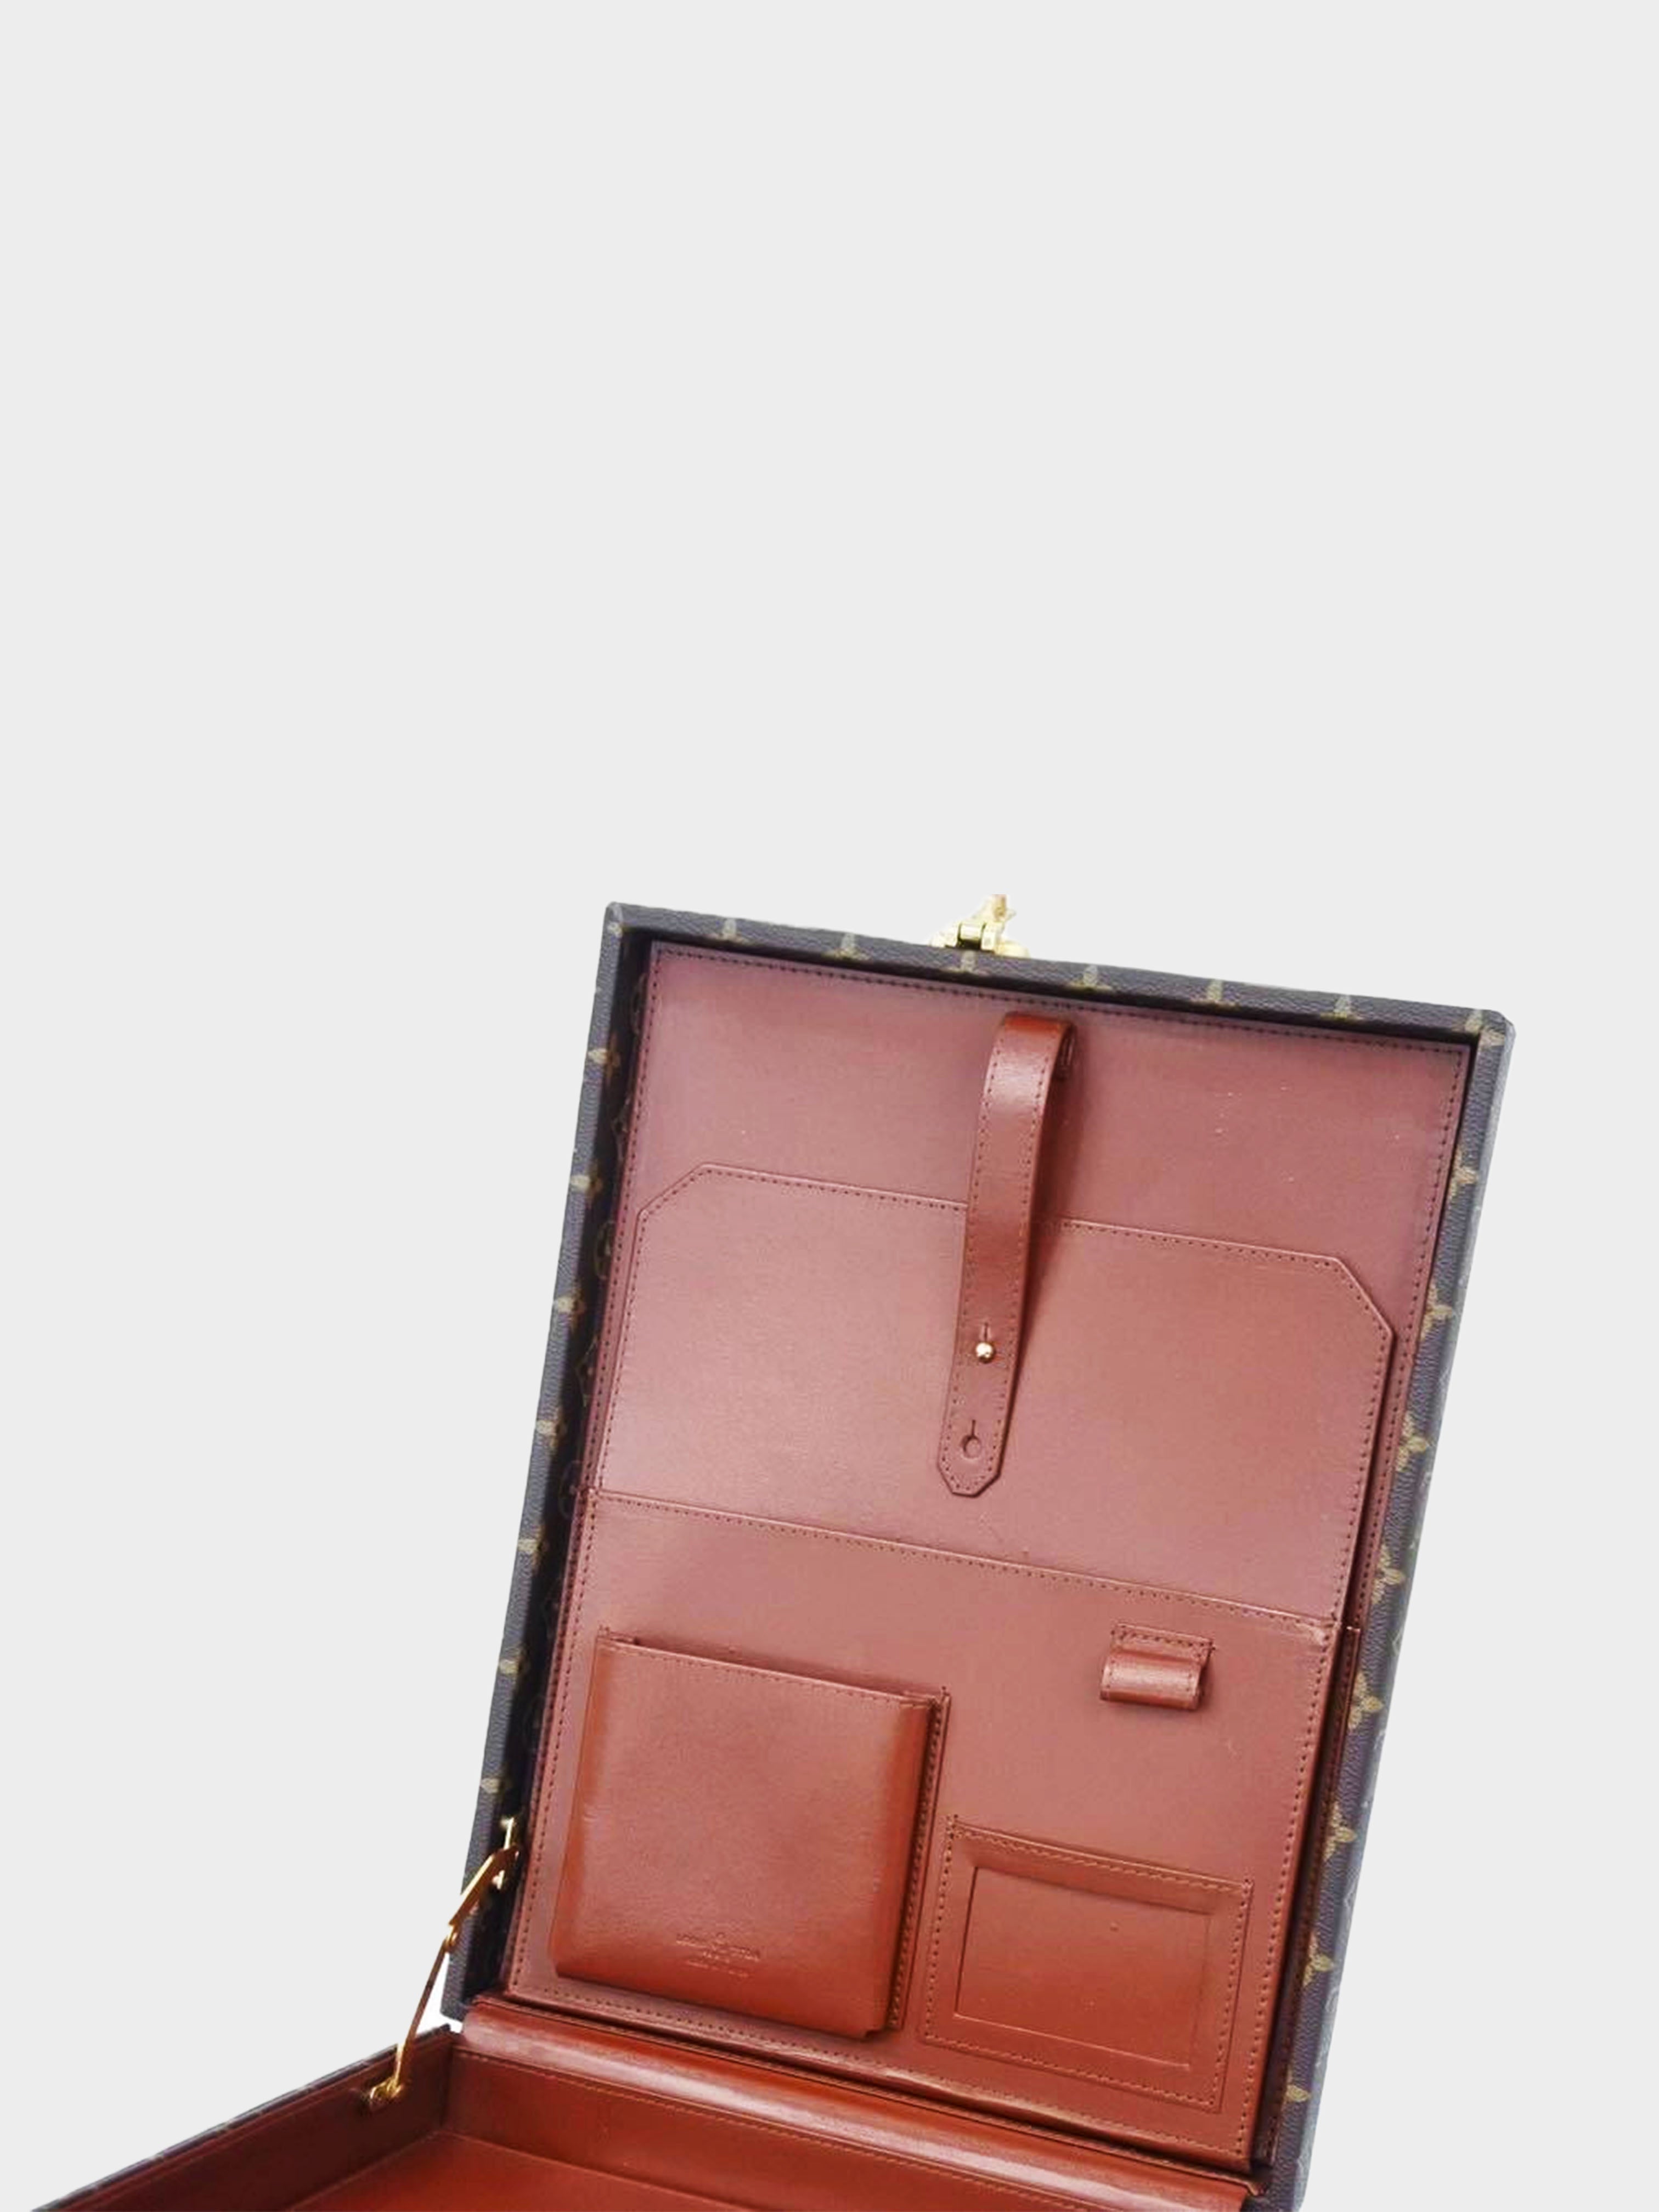 90's Louis Vuitton Mini Speedy with Push Lock Closure